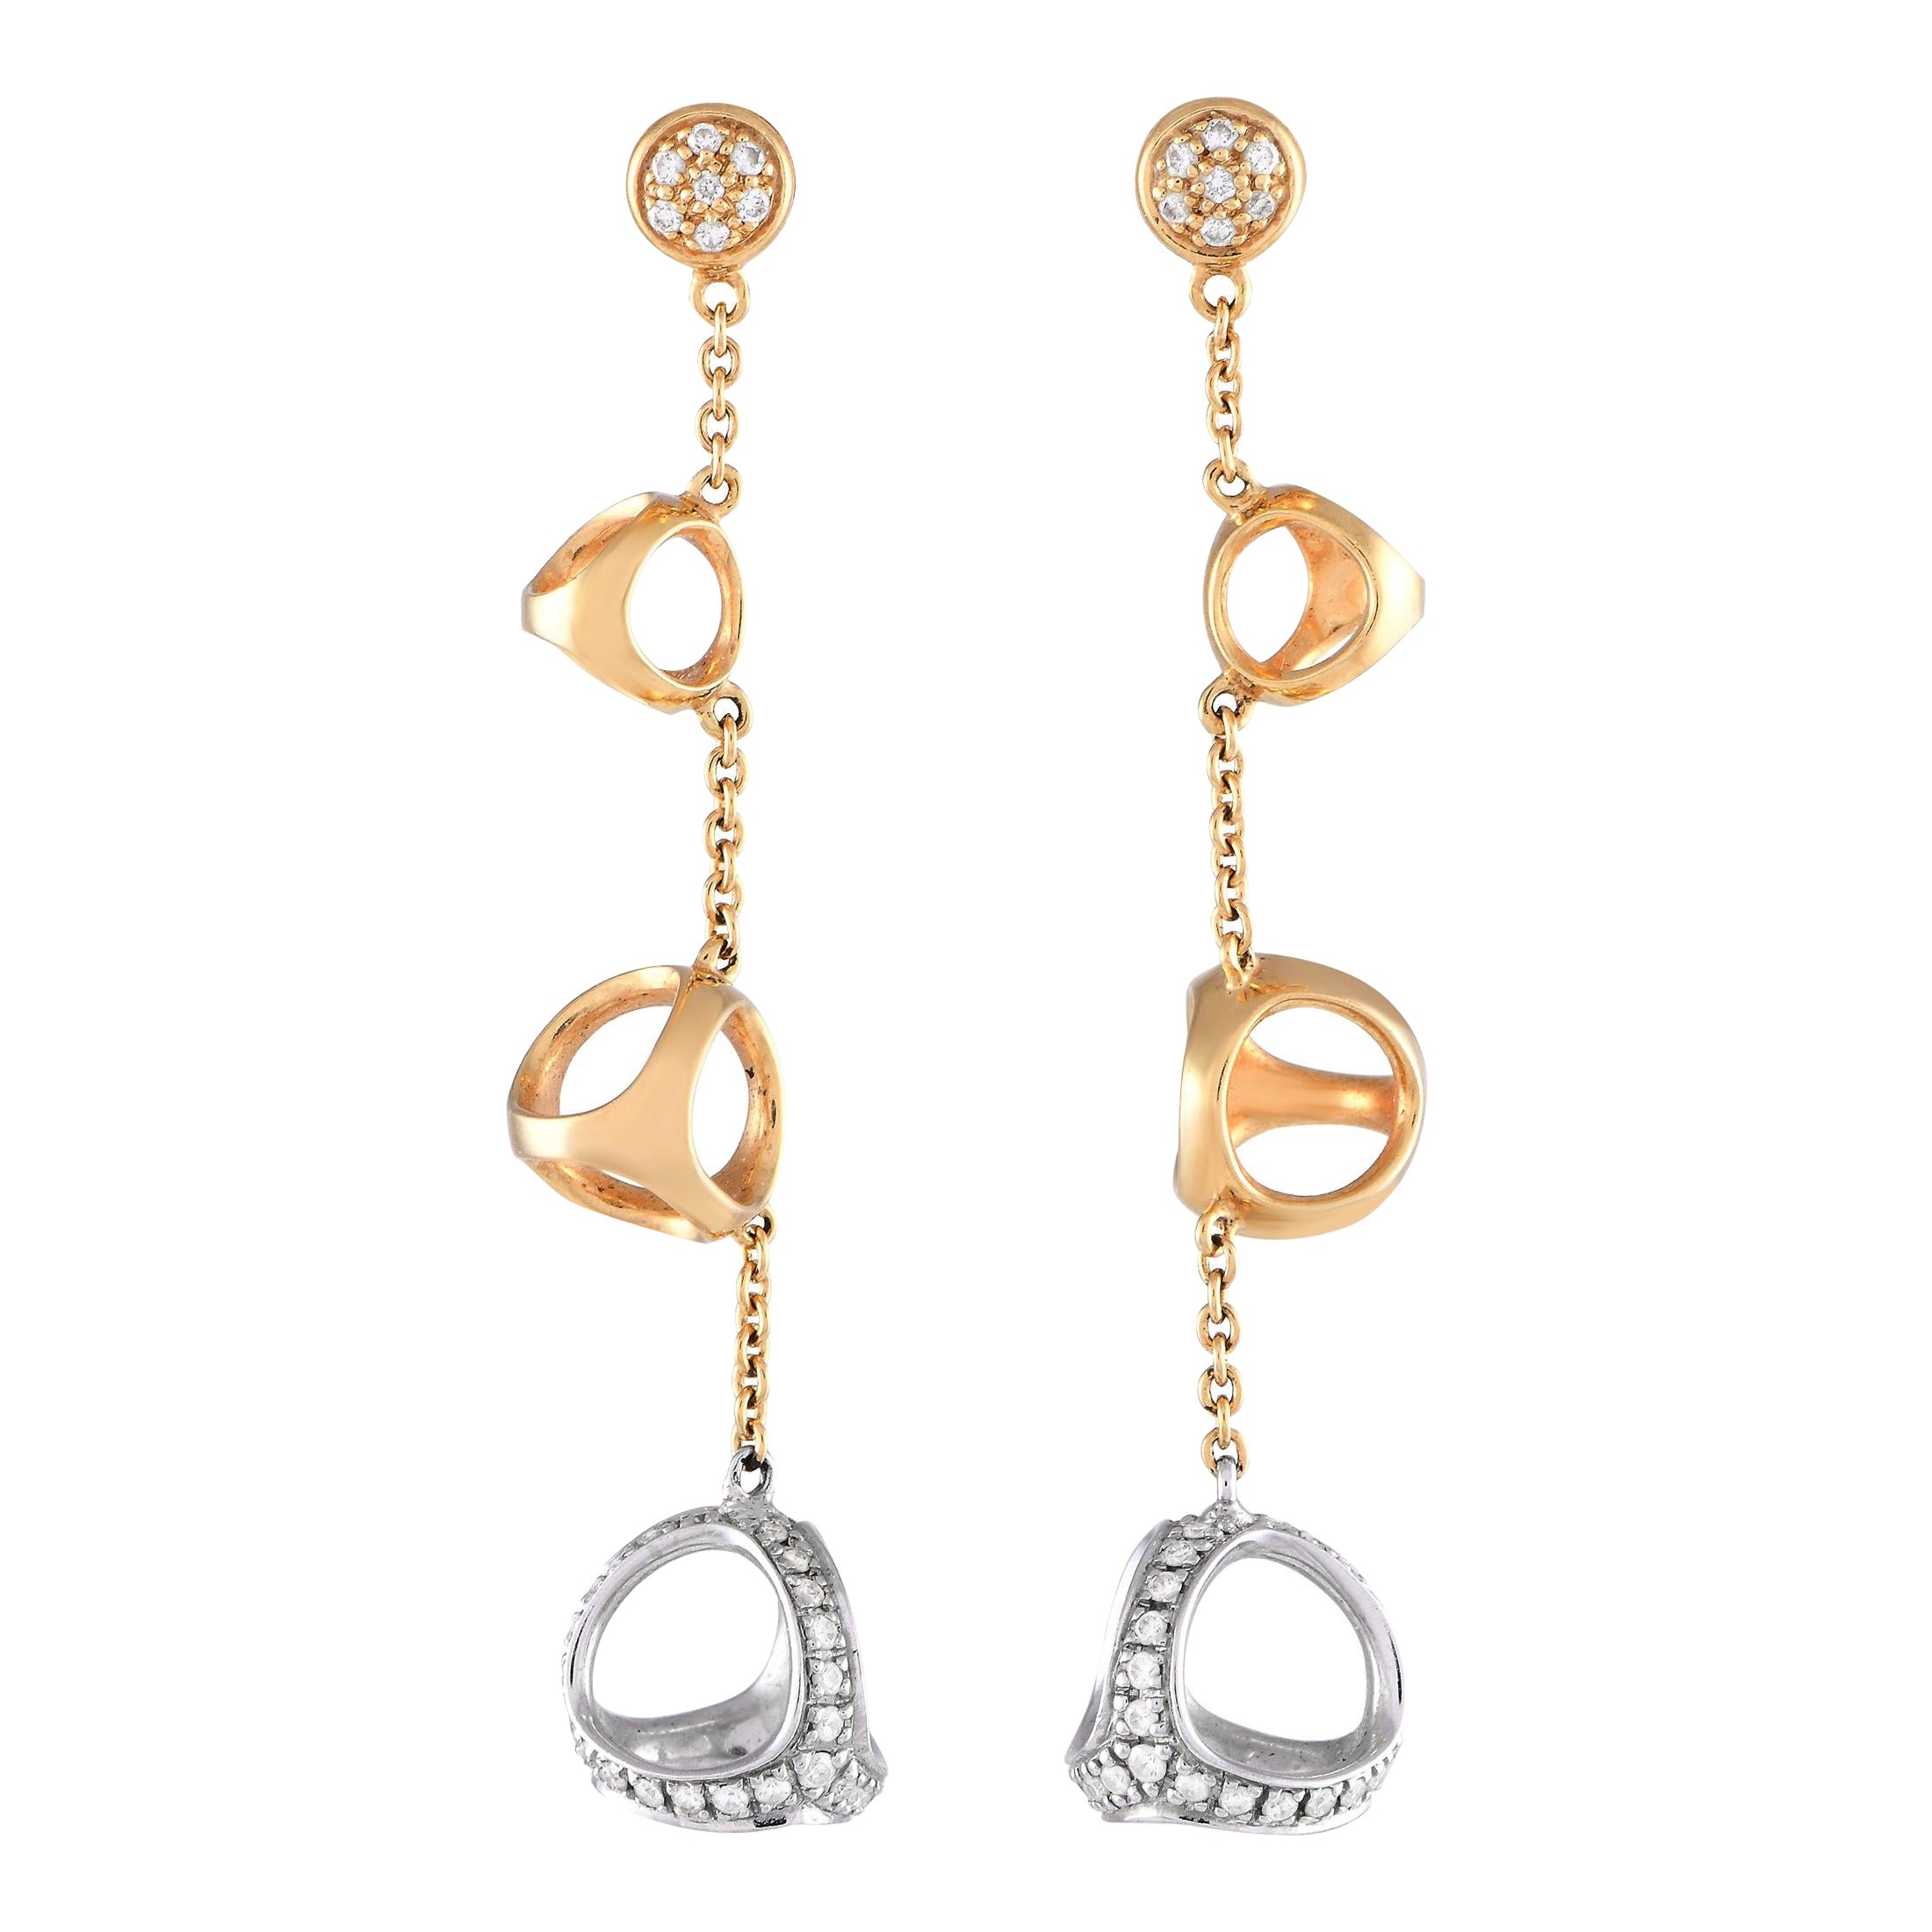 Di Modolo 18K Yellow and White Gold 0.58ct Diamond Dangling Earrings DM02-121823